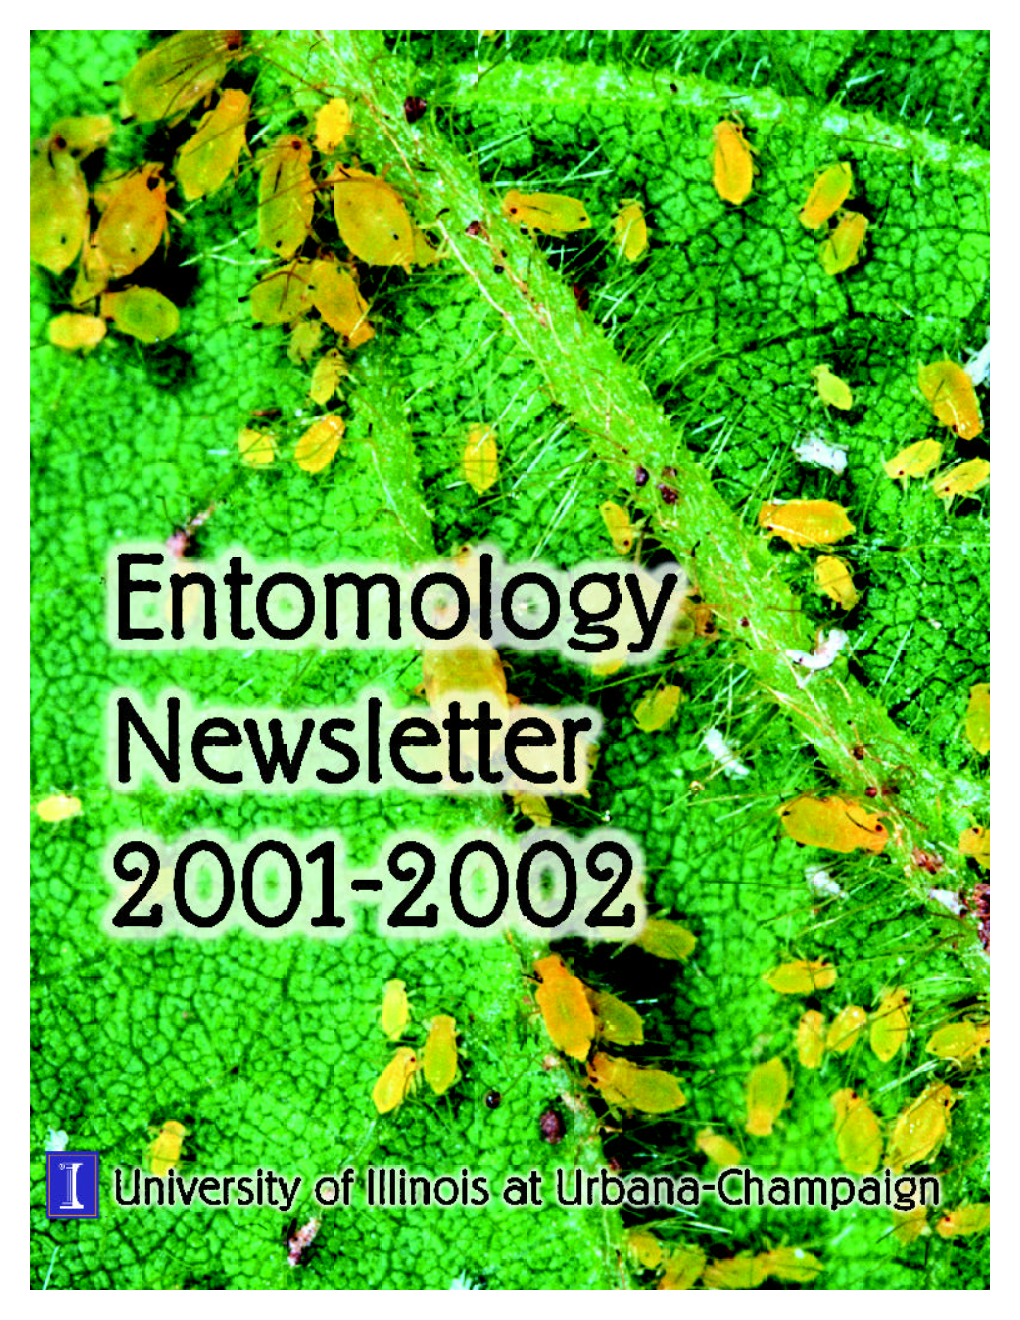 Newsletter Design by Jana Waite, School of Integrative Biology 2002 Department of Entomology University of Illinois at Urbana-Champaign